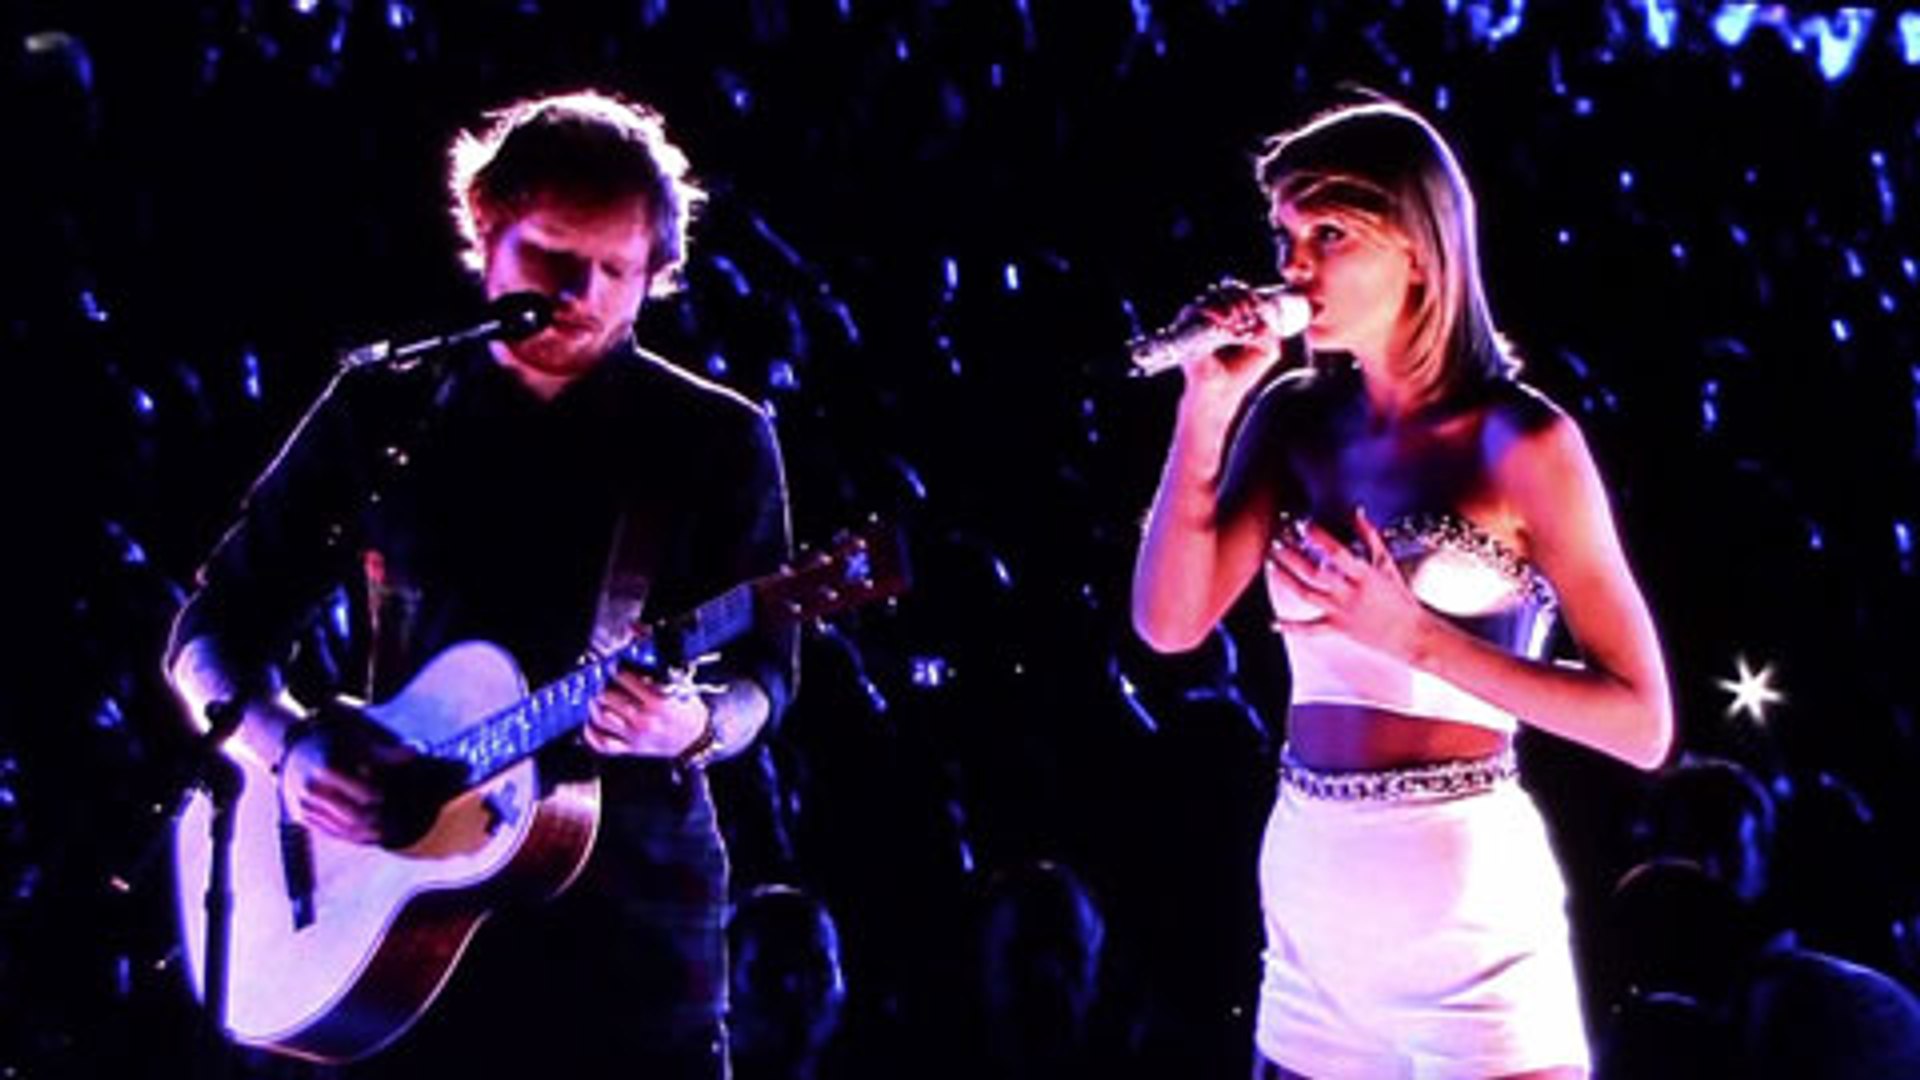 VIDEO) Taylor Swift Ed Sheeran Duet Performance | Tenerife Sea | Rock In Rio Concert